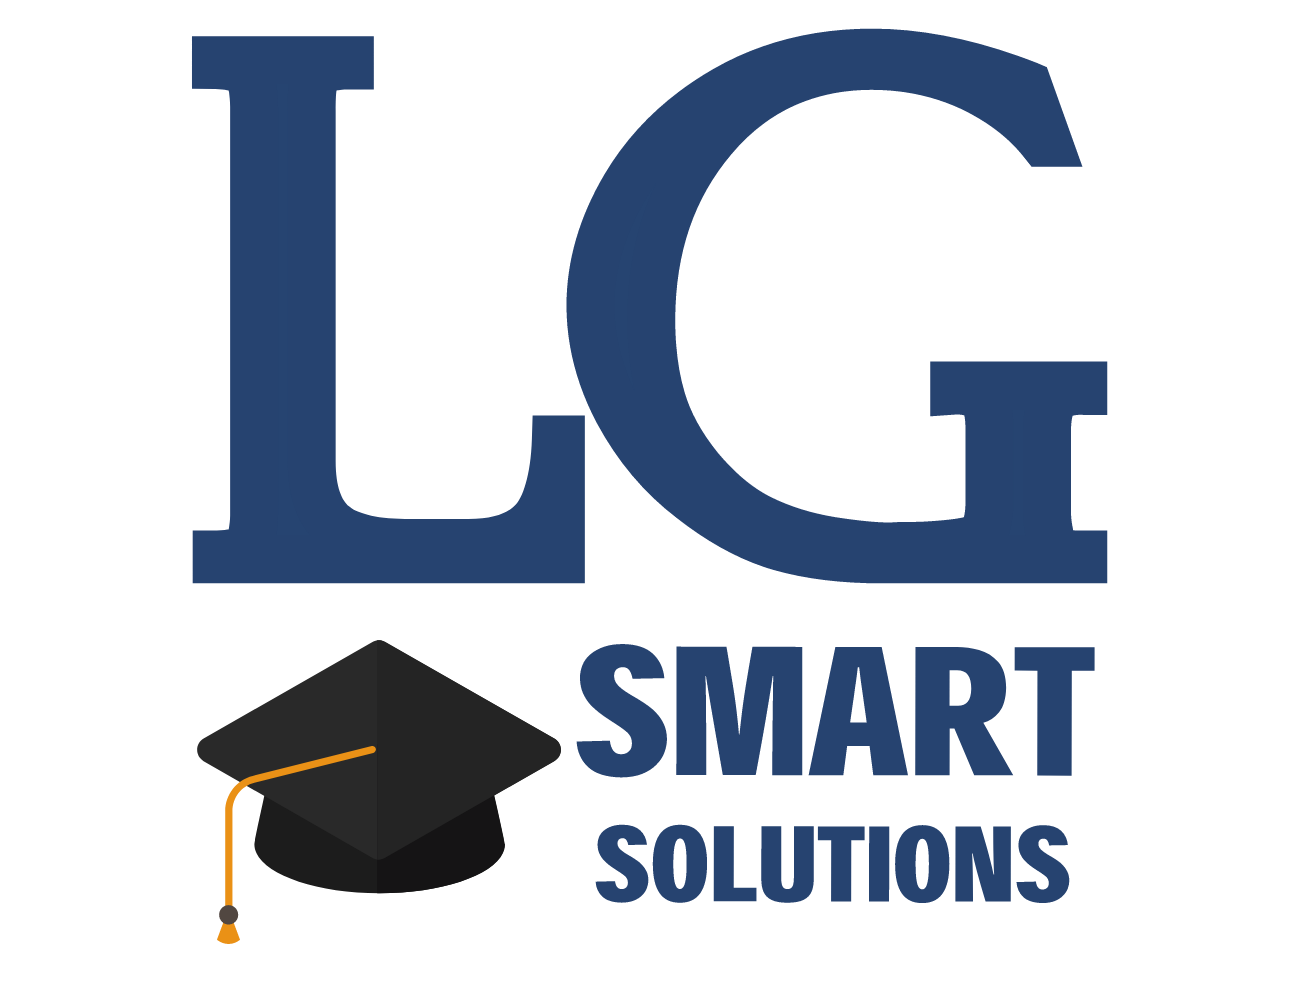 LG Smart Solutions